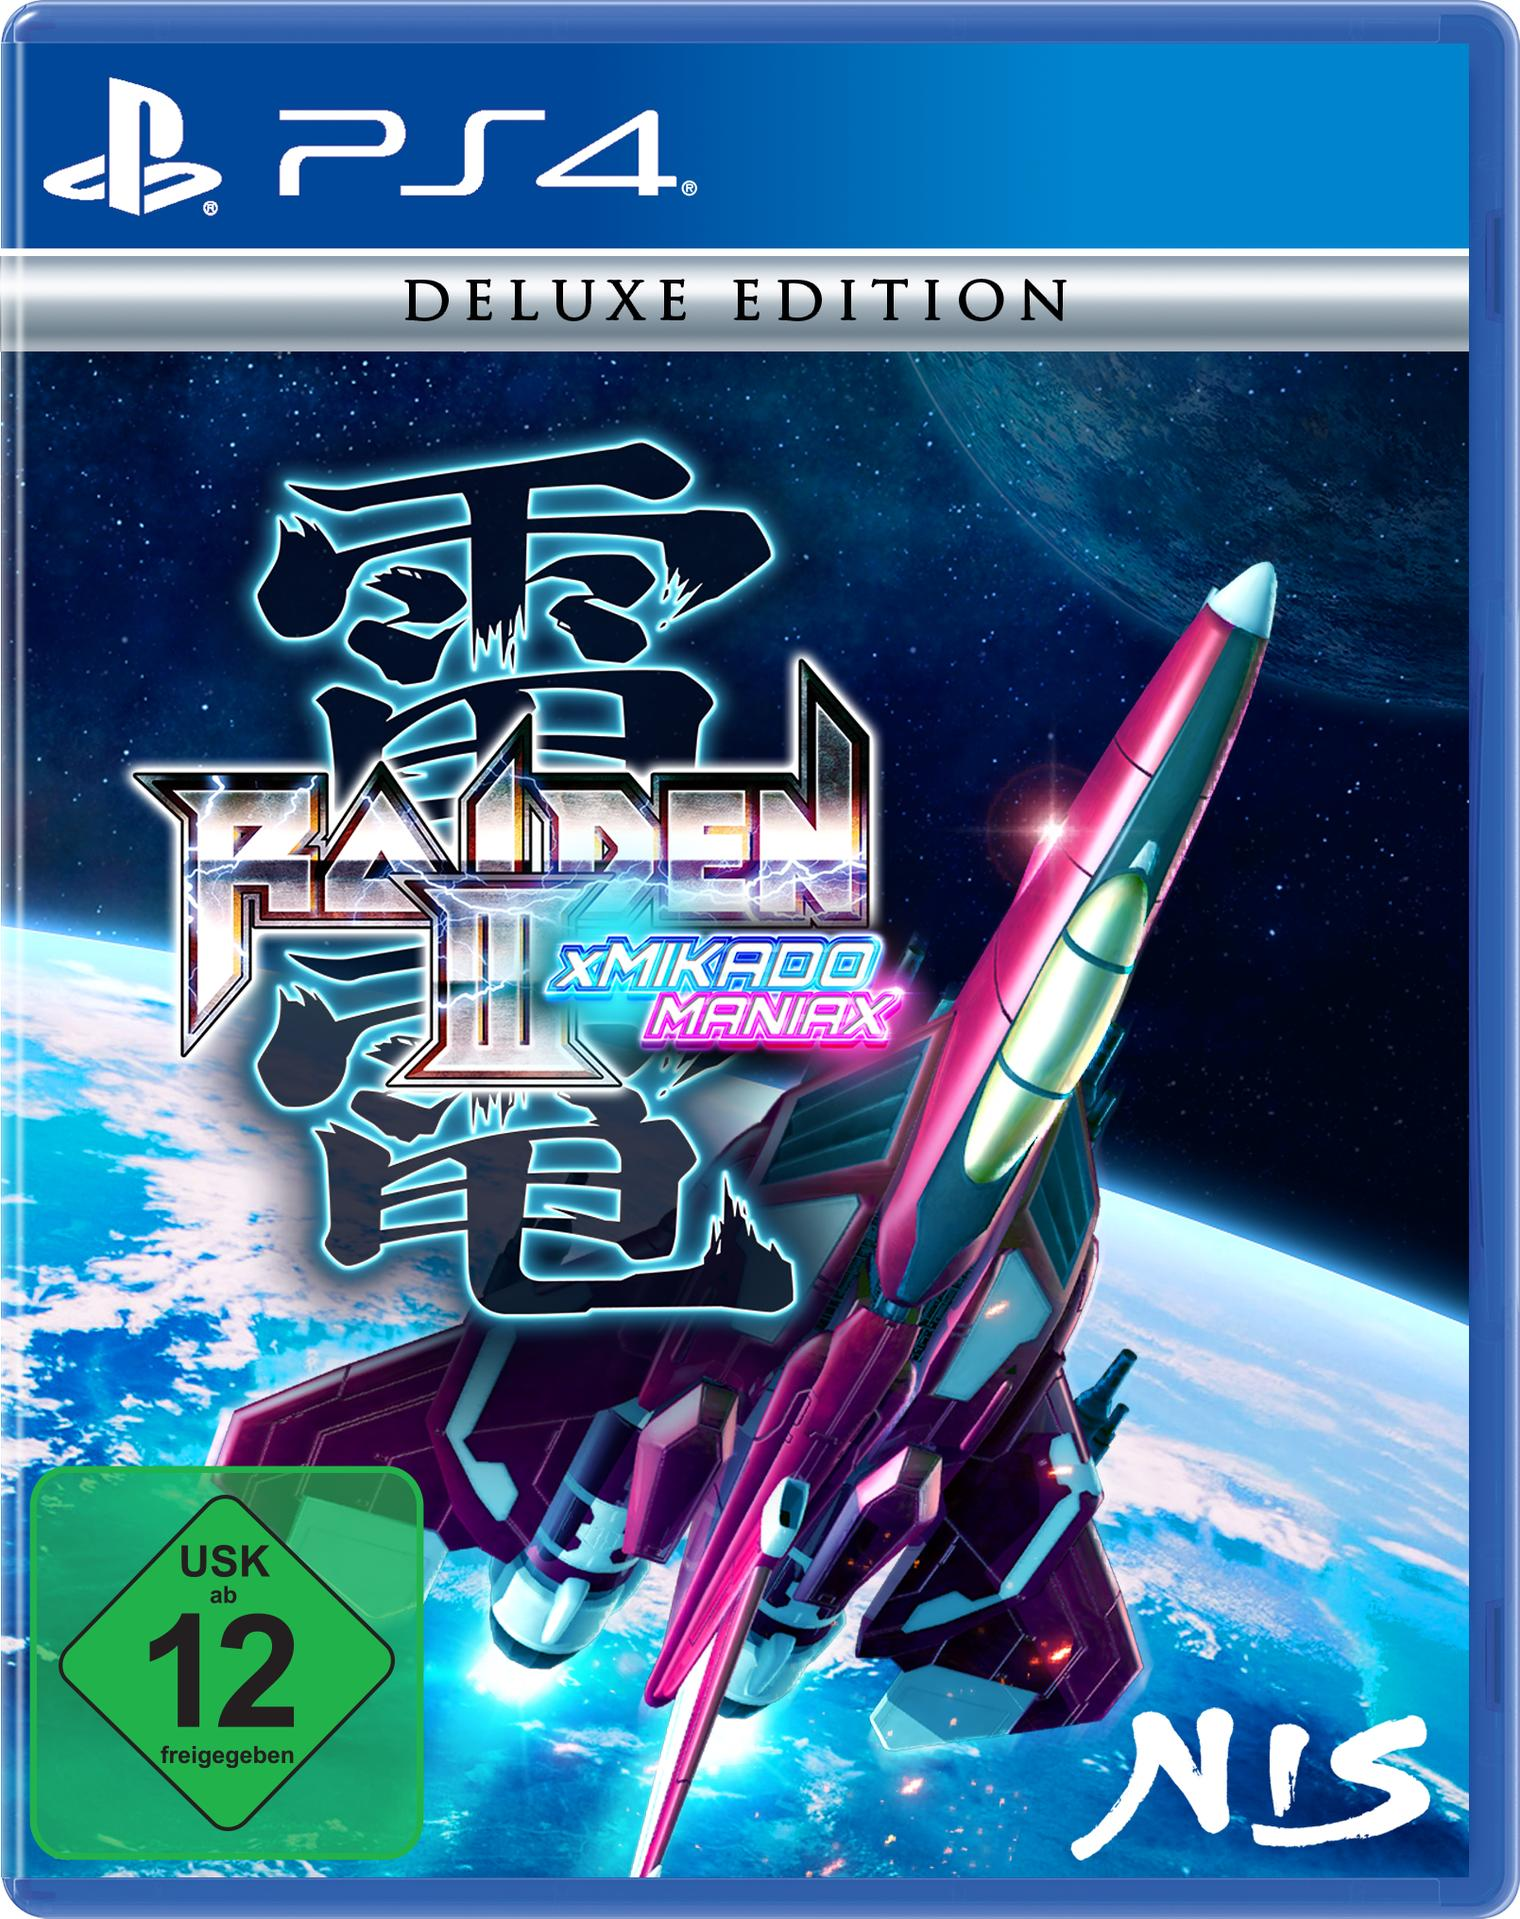 Raiden III x MIKADO MANIAX - Edition Deluxe [PlayStation 4